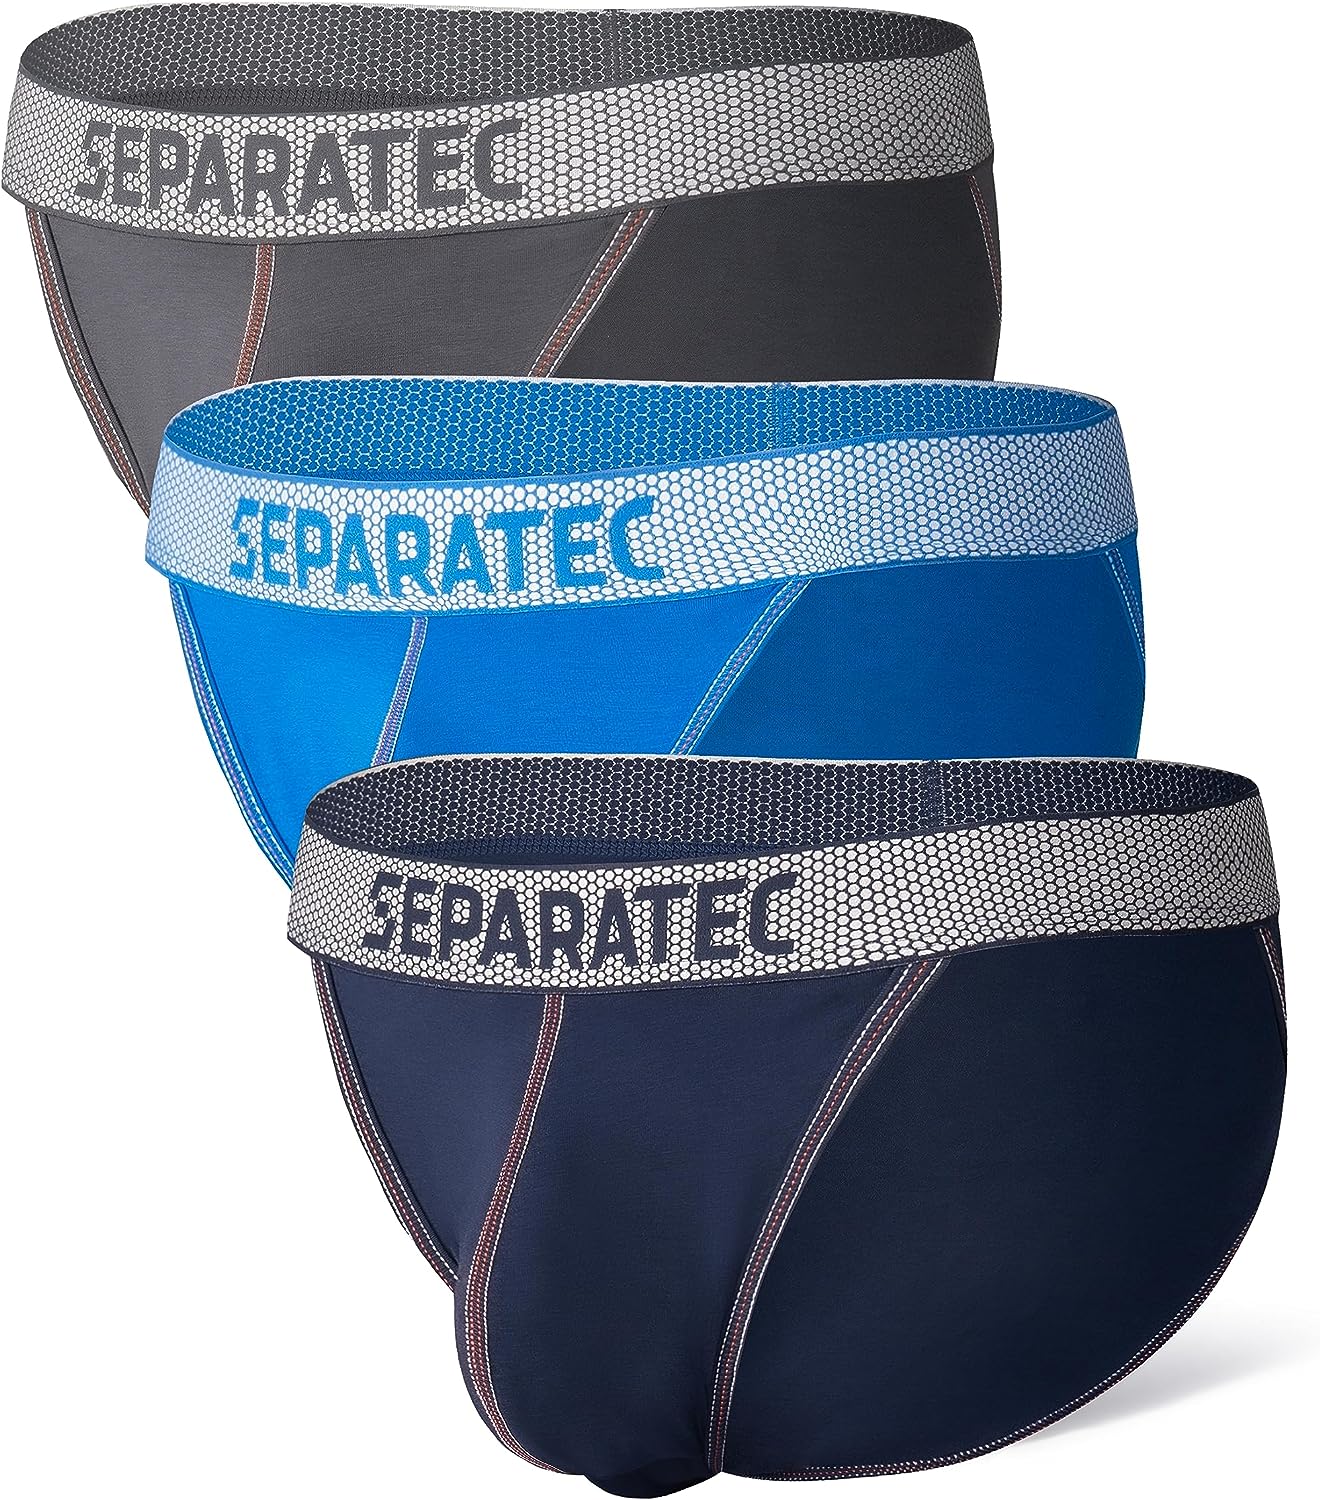 Separatec Men's Bikini Briefs Premium Soft Cotton Modal Bulge